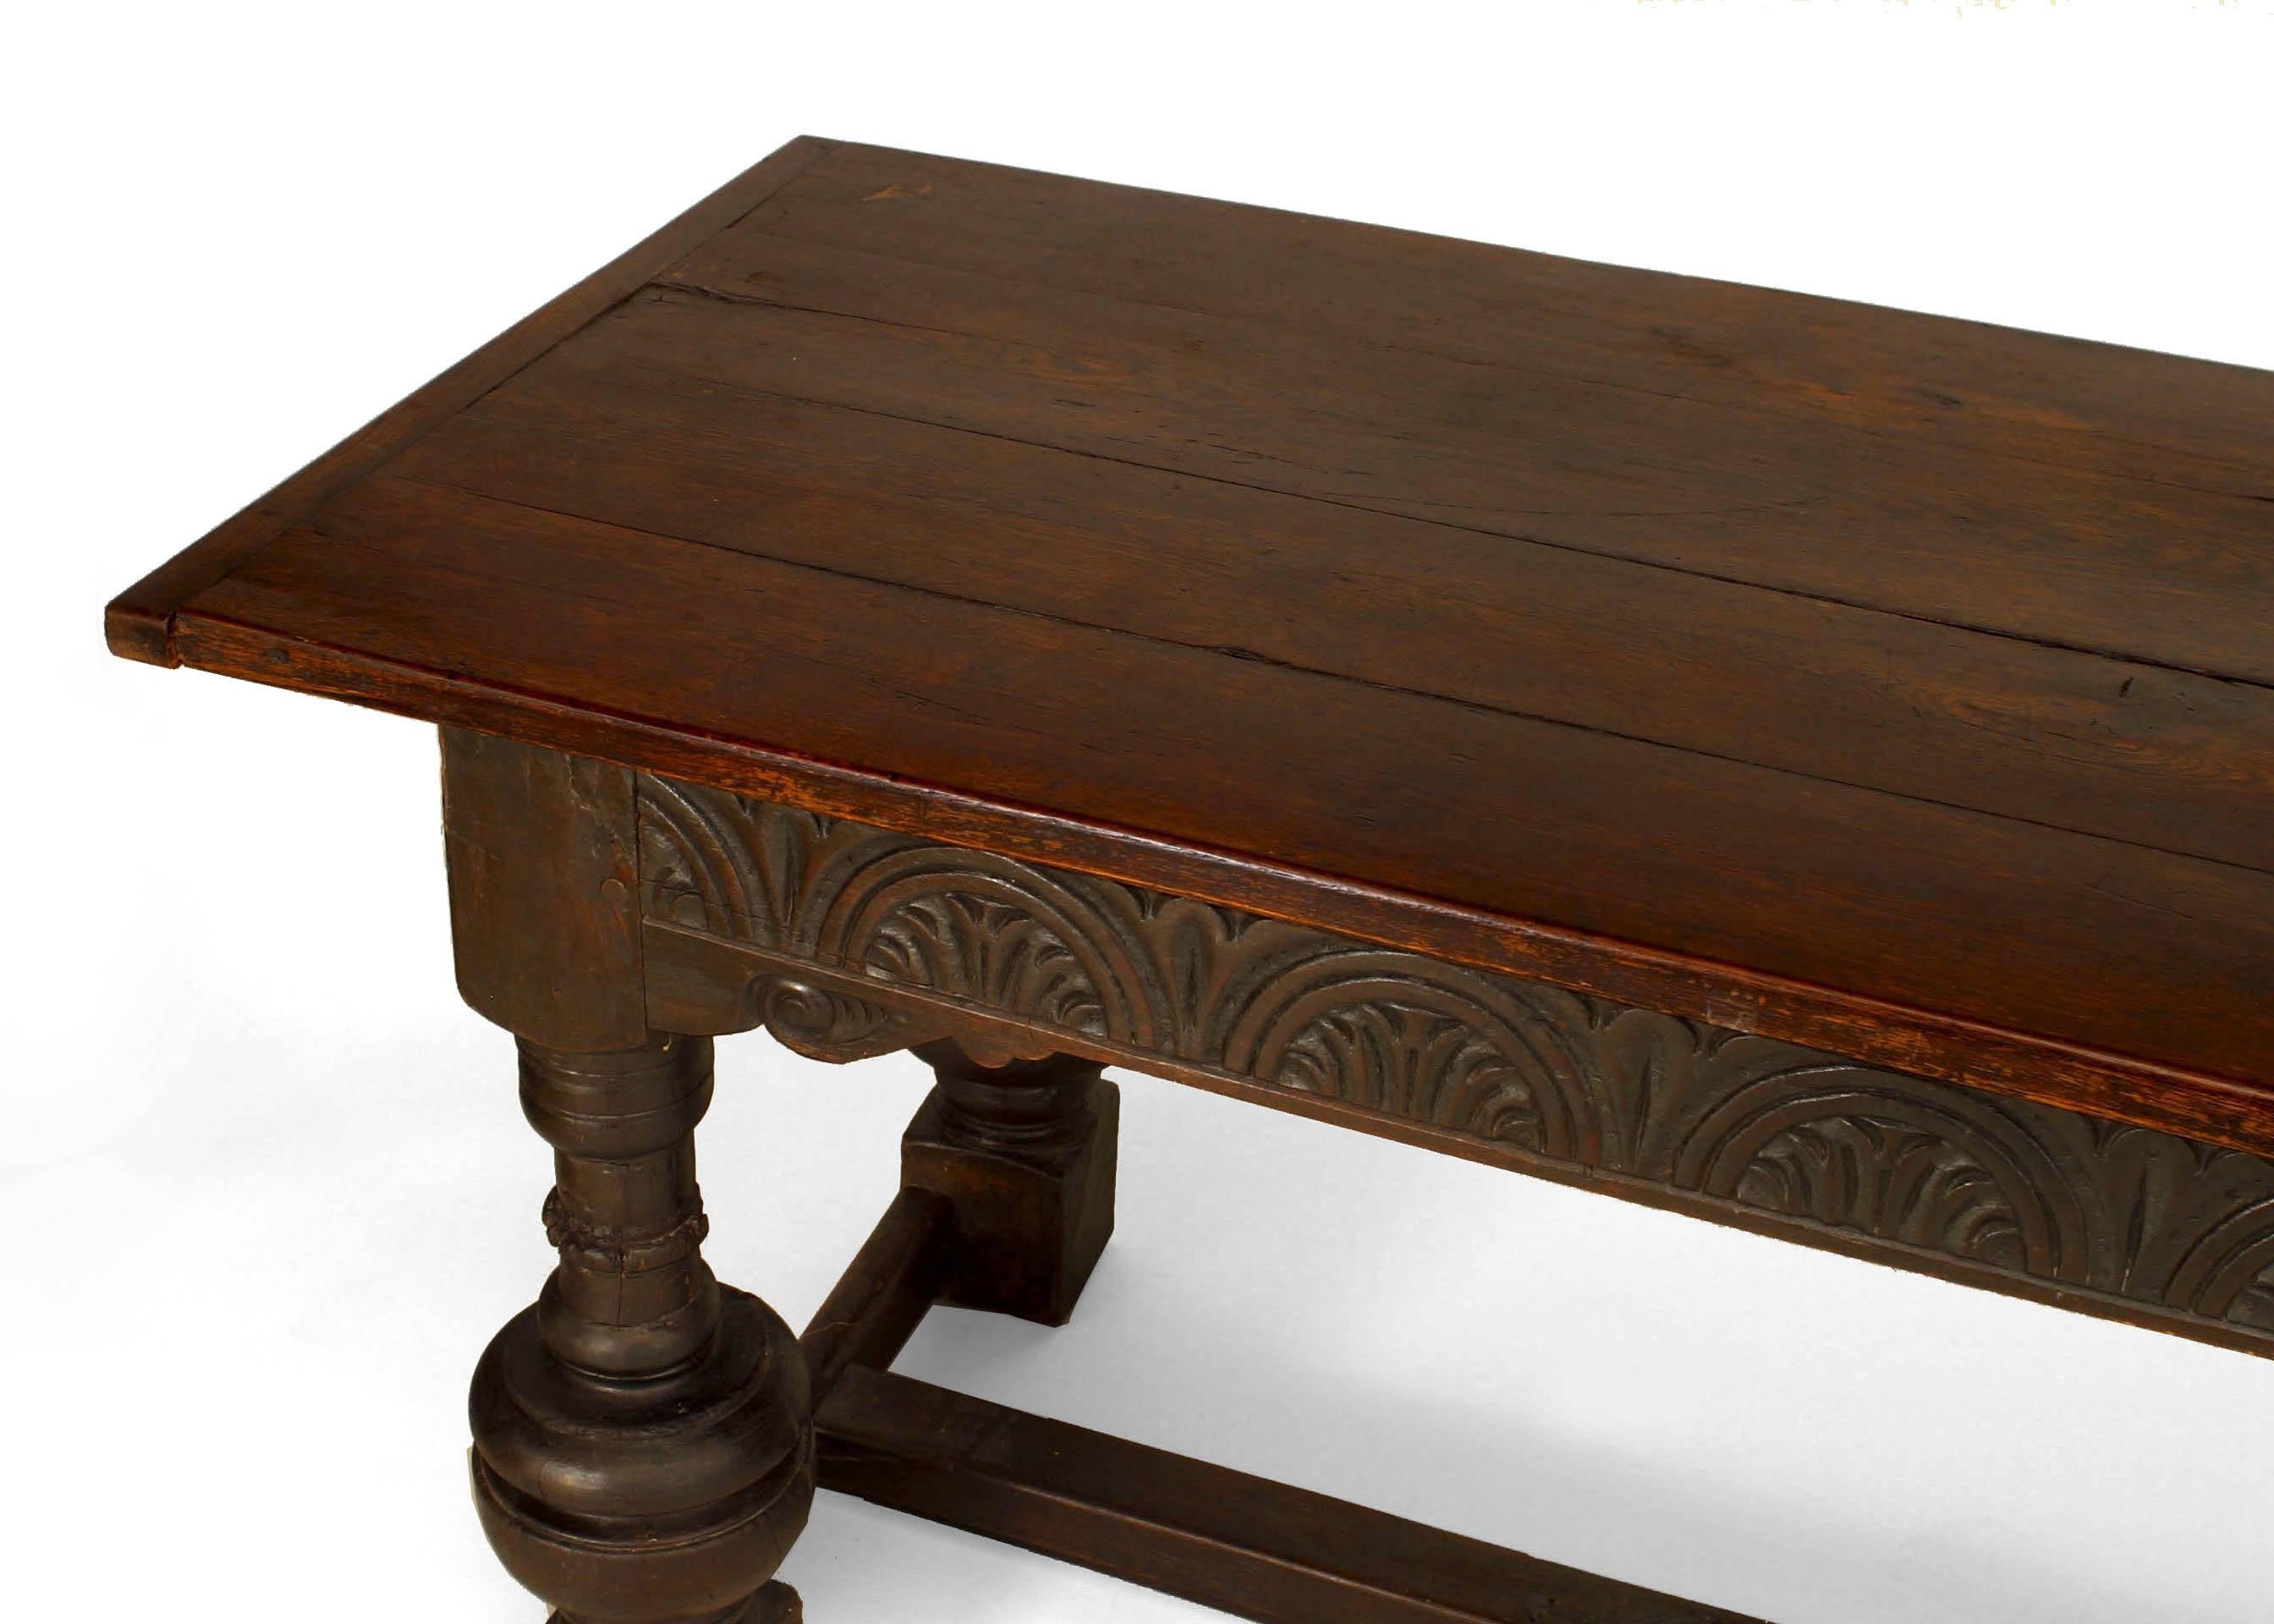 Renaissance Revival Italian Renaissance Oak Refectory Table with Late 19th Century Top